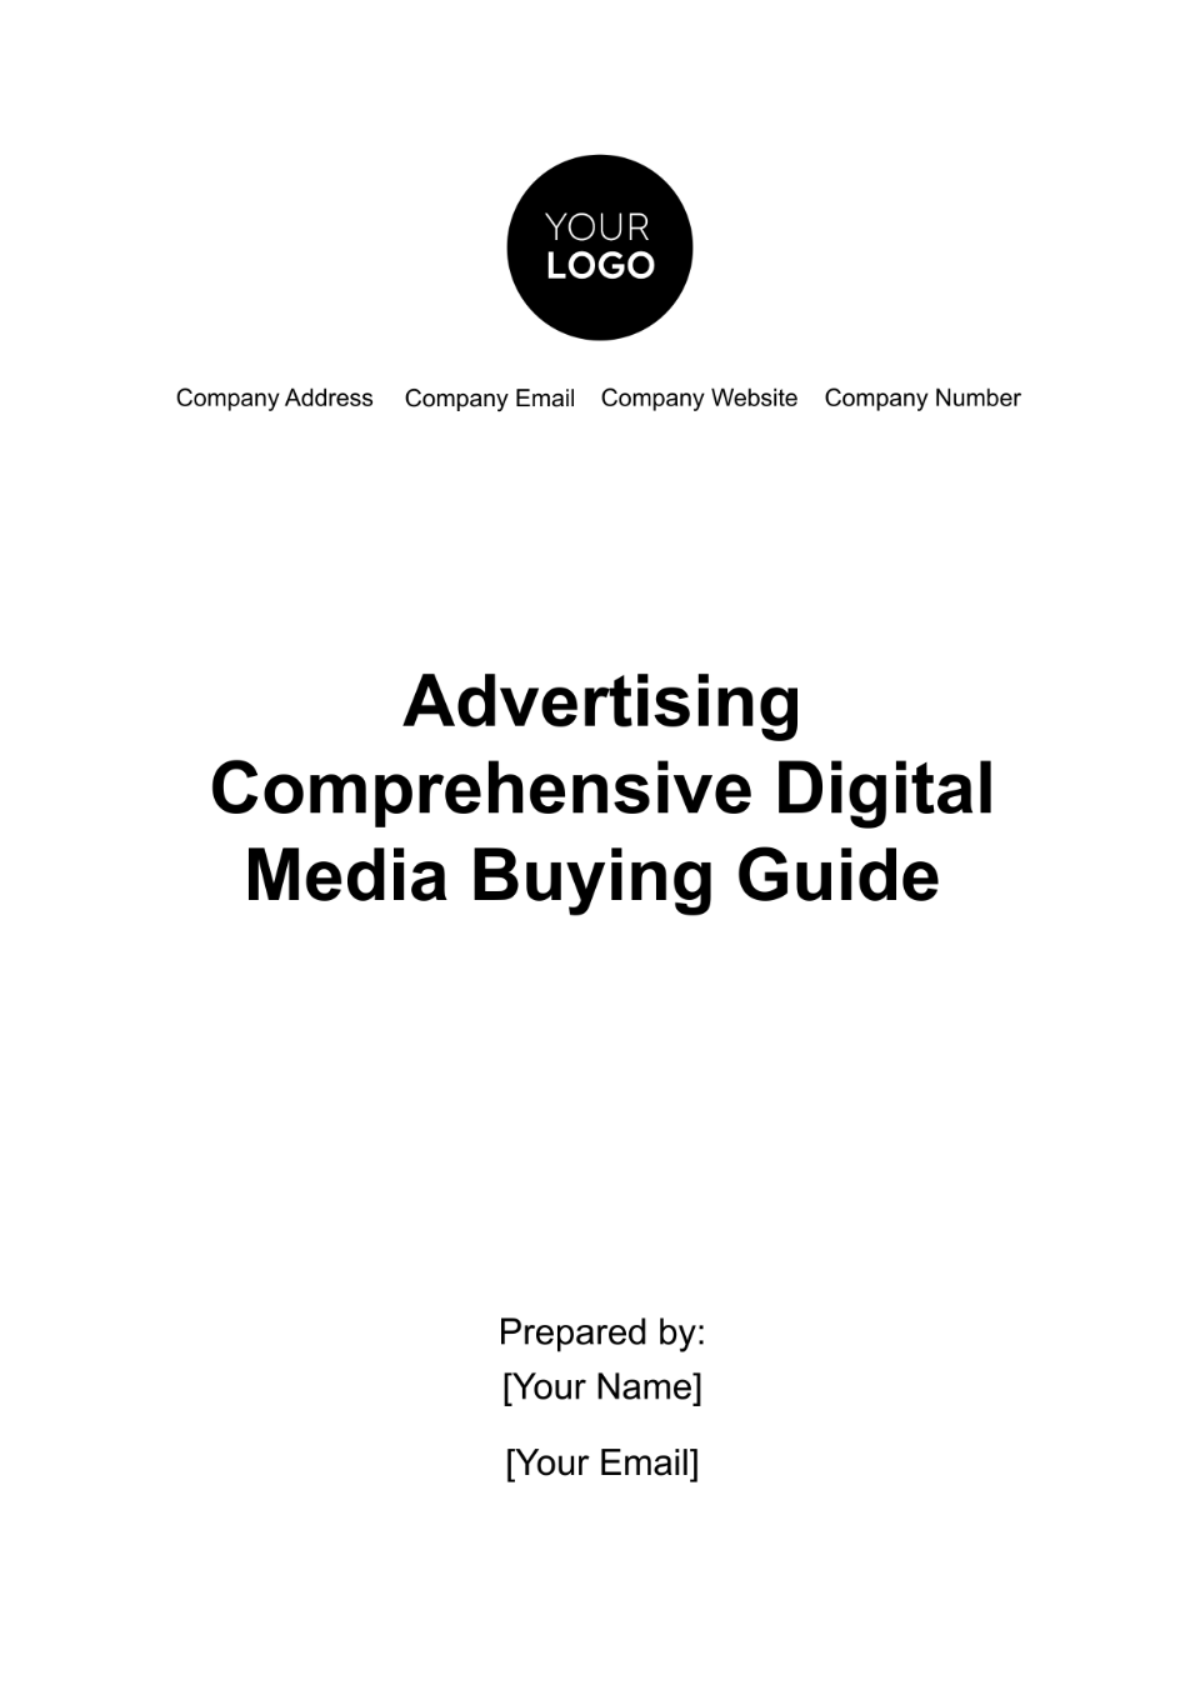 Free Advertising Comprehensive Digital Media Buying Guide Template